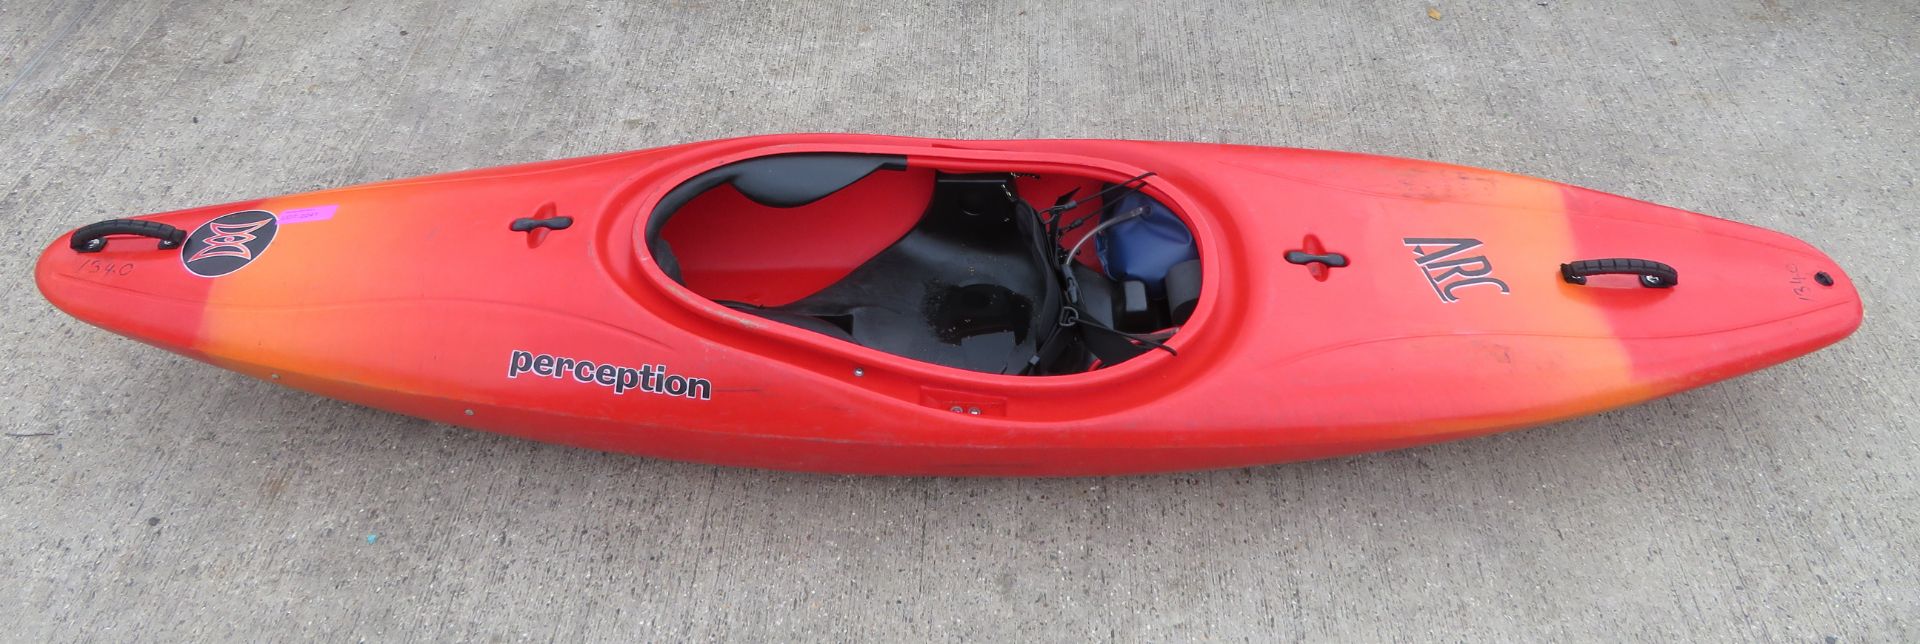 Arc Perception kayak